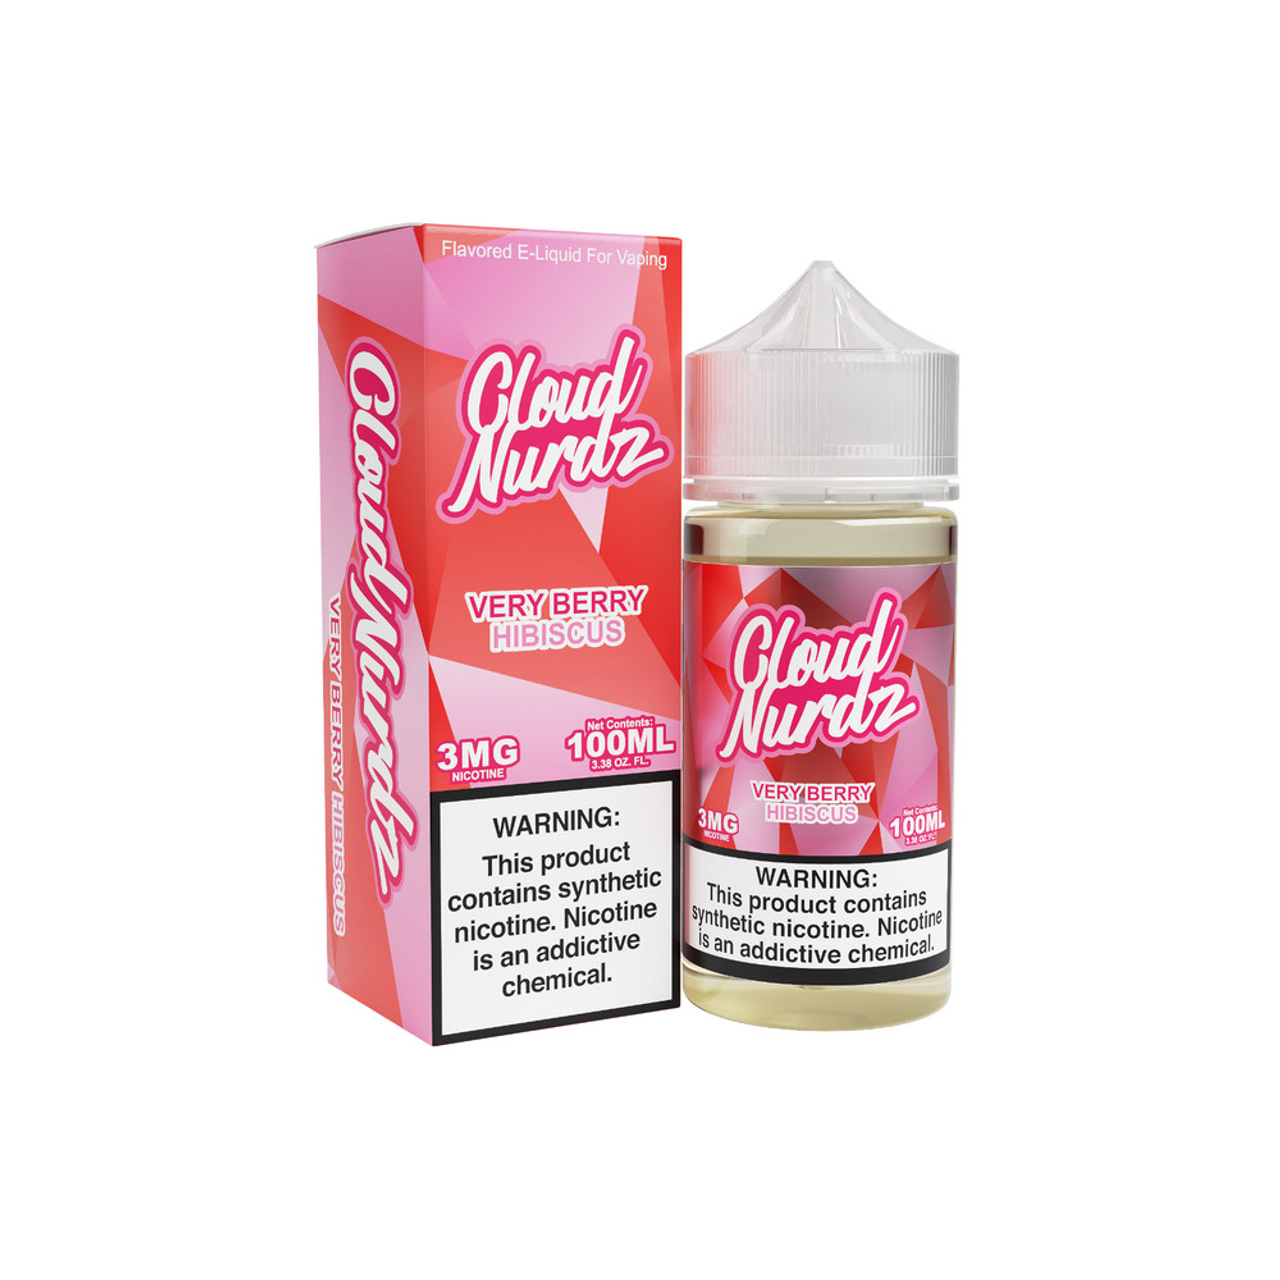 Cloud Nurdz Series E-Liquid 100mL Berry Hibiscus with packaging